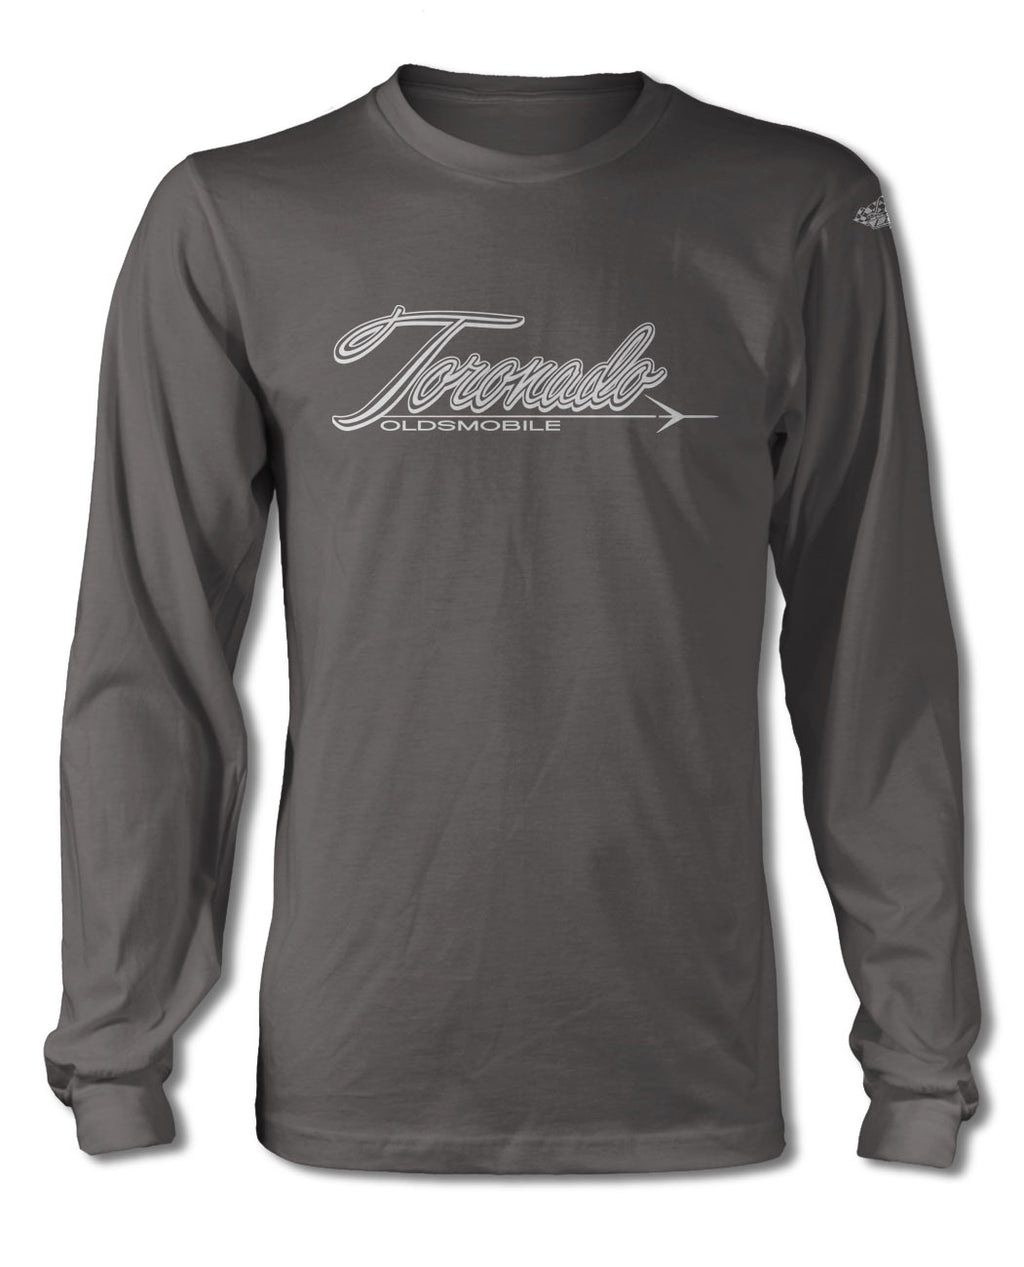 Oldsmobile Toronado Emblem 1968 - 1970 T-Shirt - Long Sleeves - Emblem